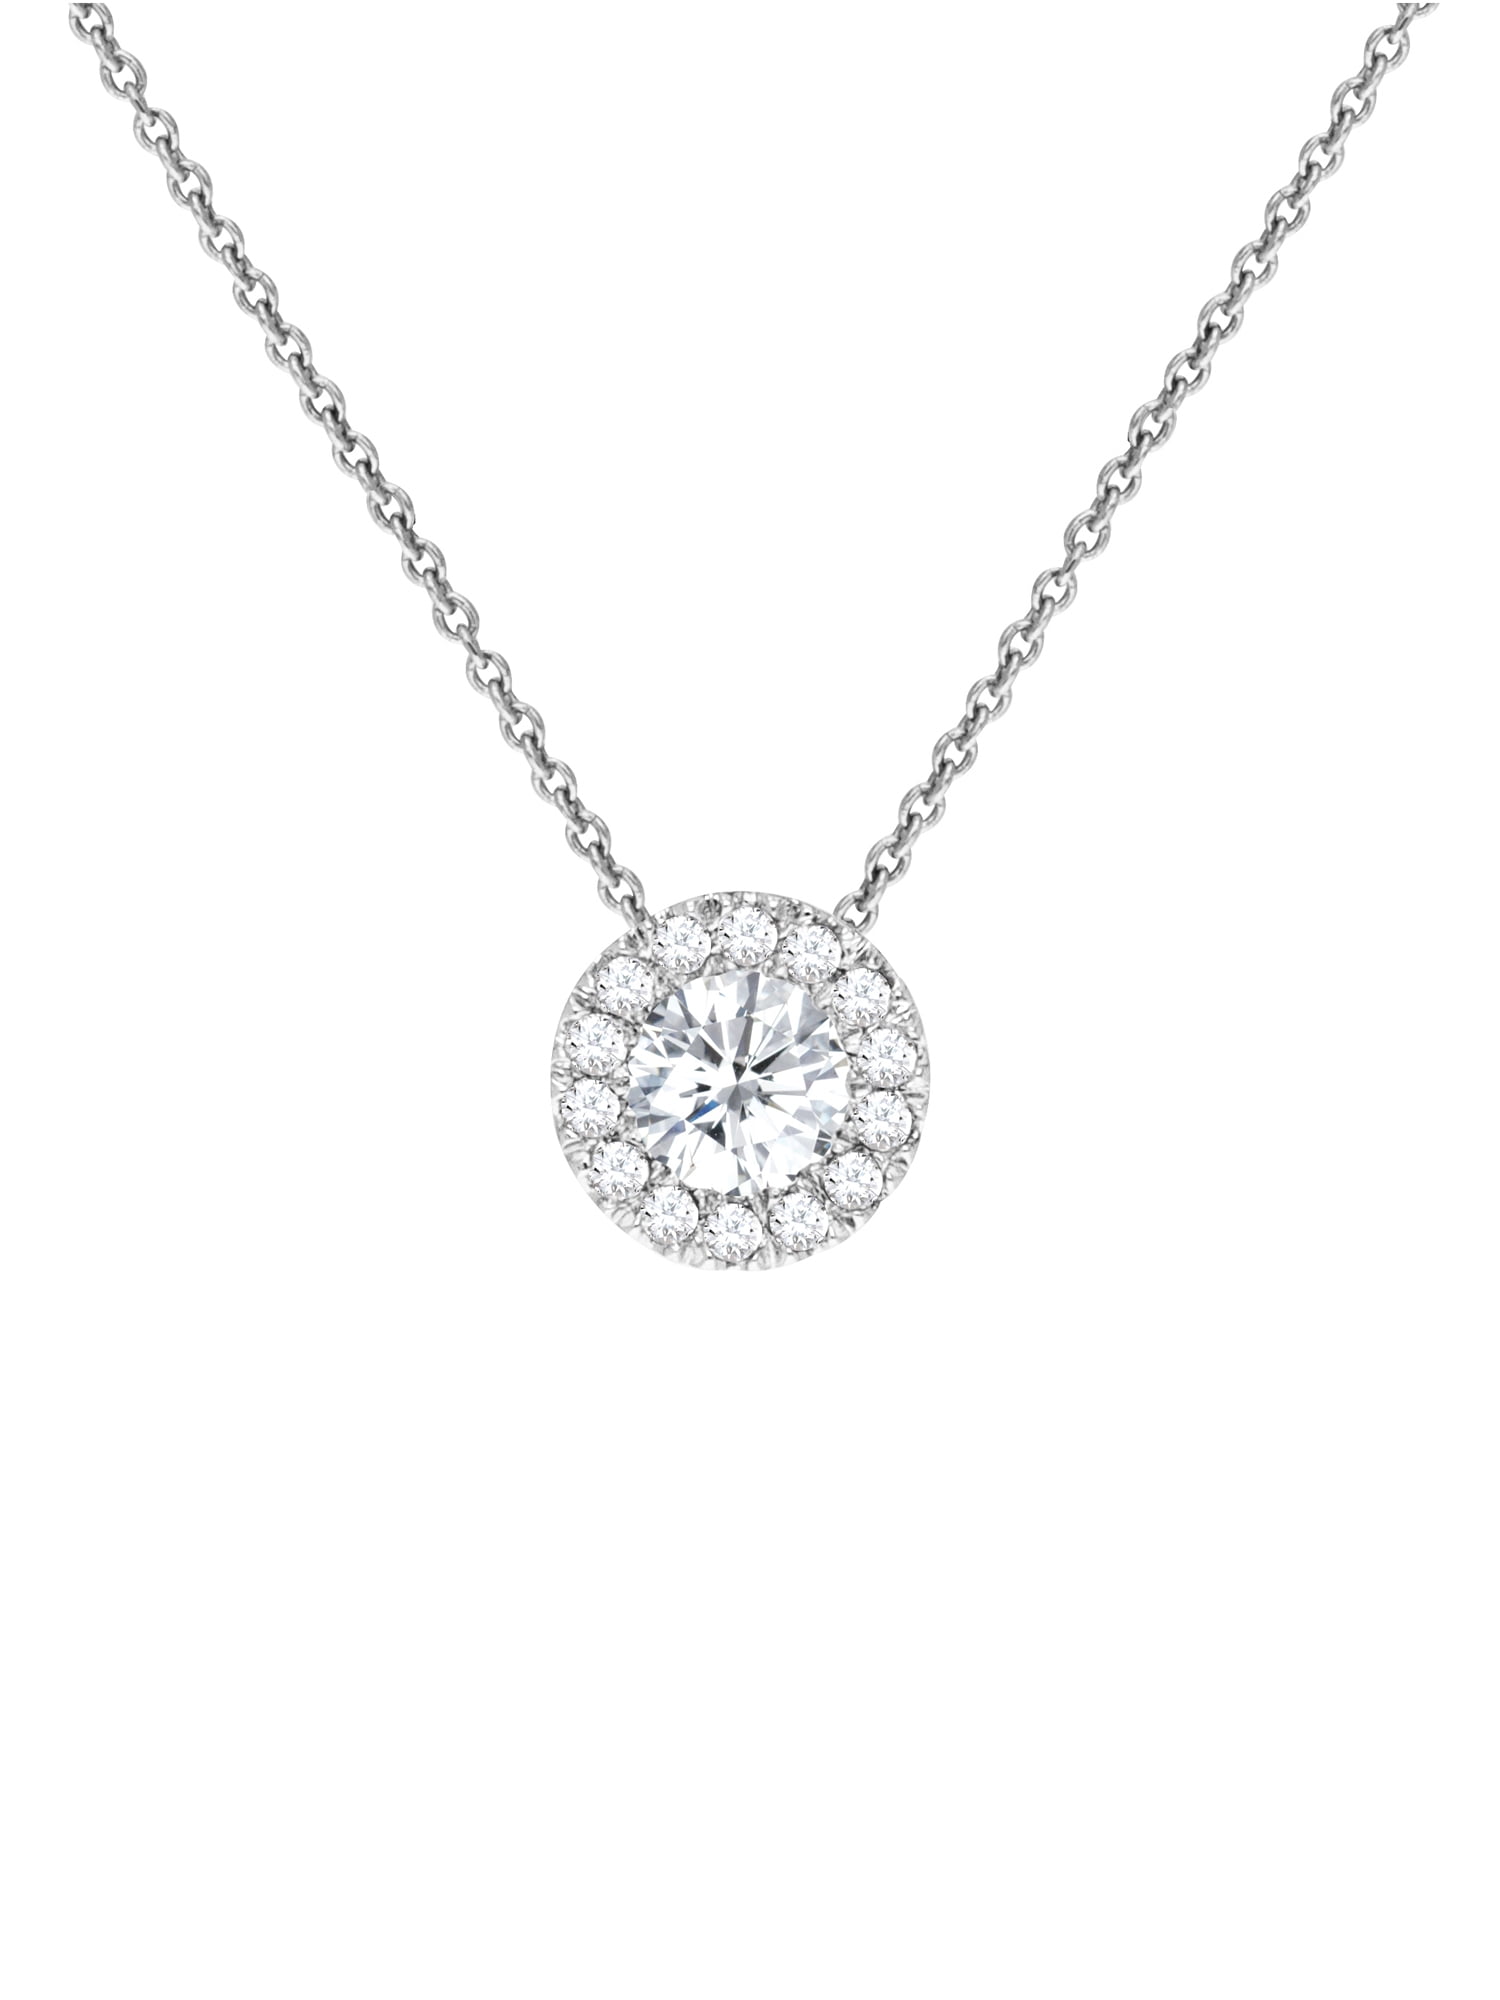 Champagne Diamond Pendant Necklace, Brown Diamond Pendant, Halo Pendant  Necklace, 14K White Gold 1.23 Carat Pave Handmade